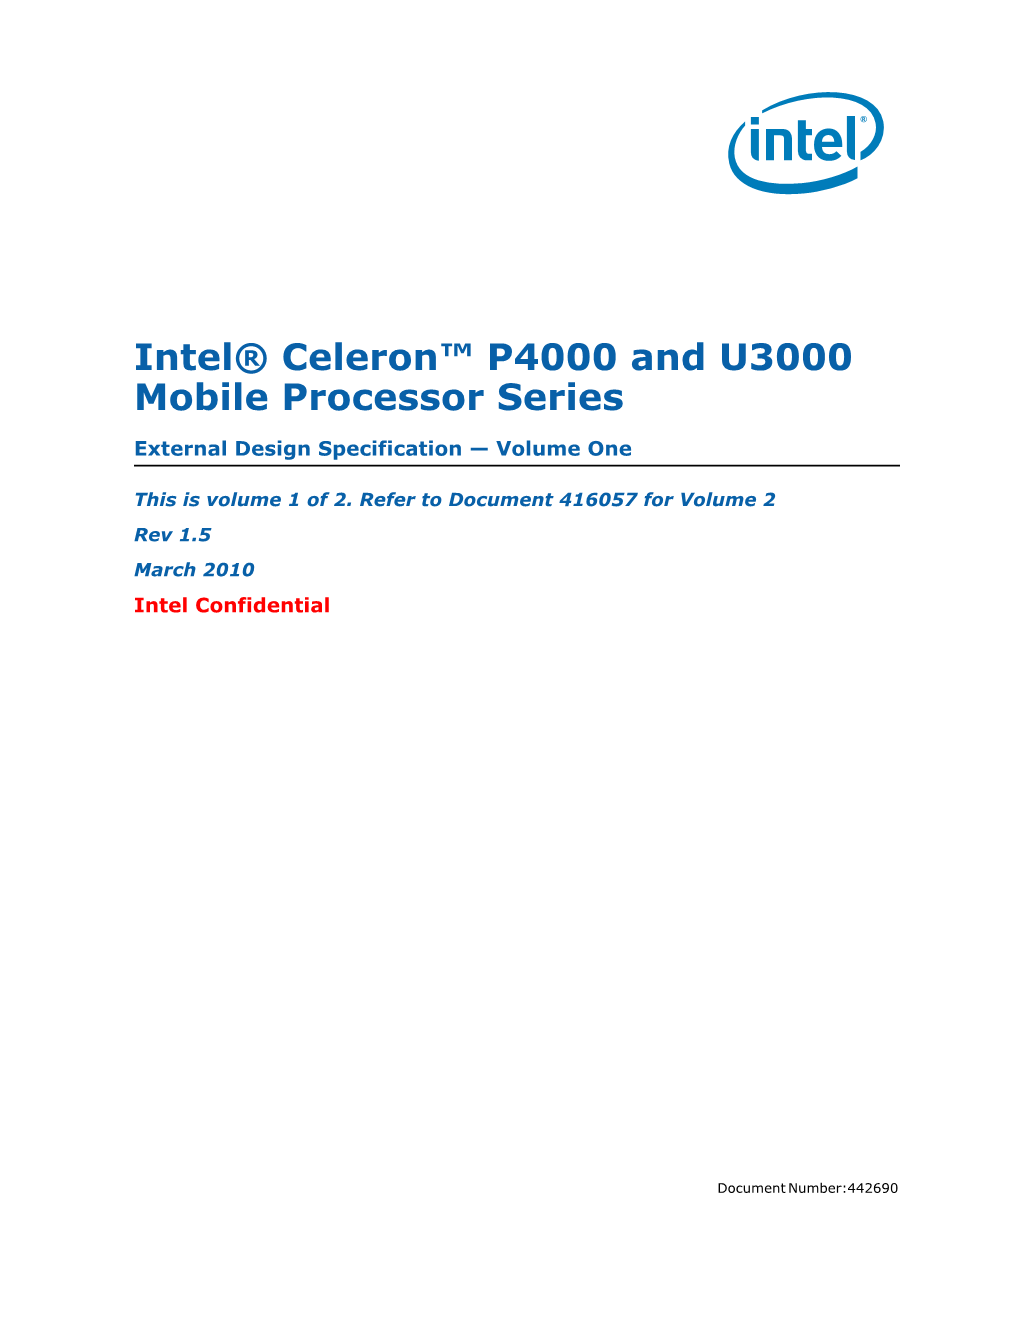 Intel® Celeron™ P4000 and U3000 Mobile Processor Series